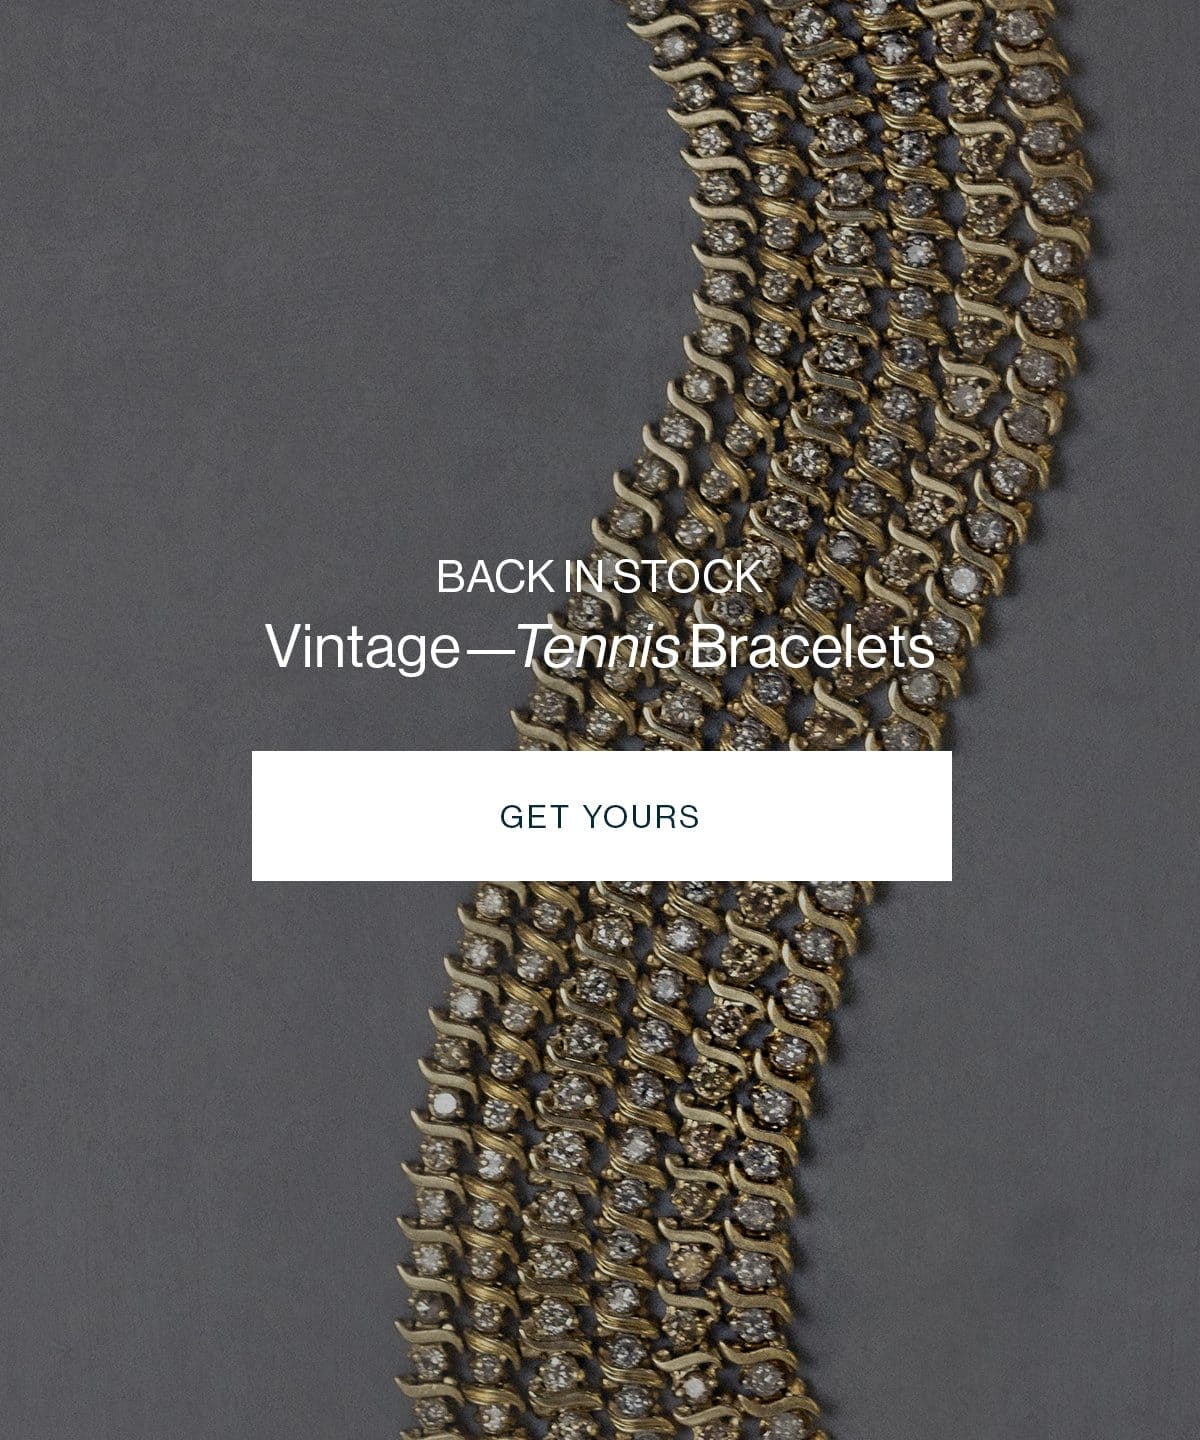 Vintage—Tennis Bracelets